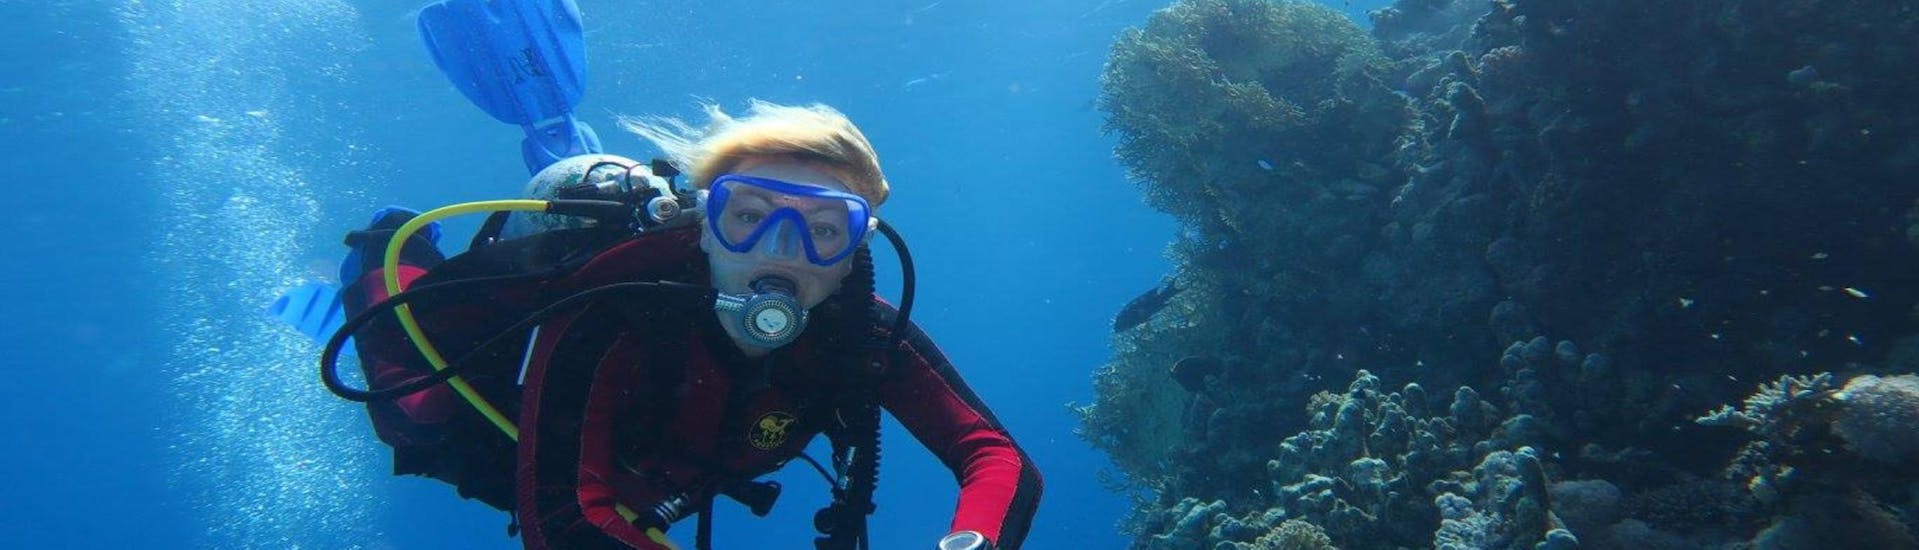 scuba-diving-course-for-beginners-open-water-diver-tarifa-leon-marina-tarifa-hero